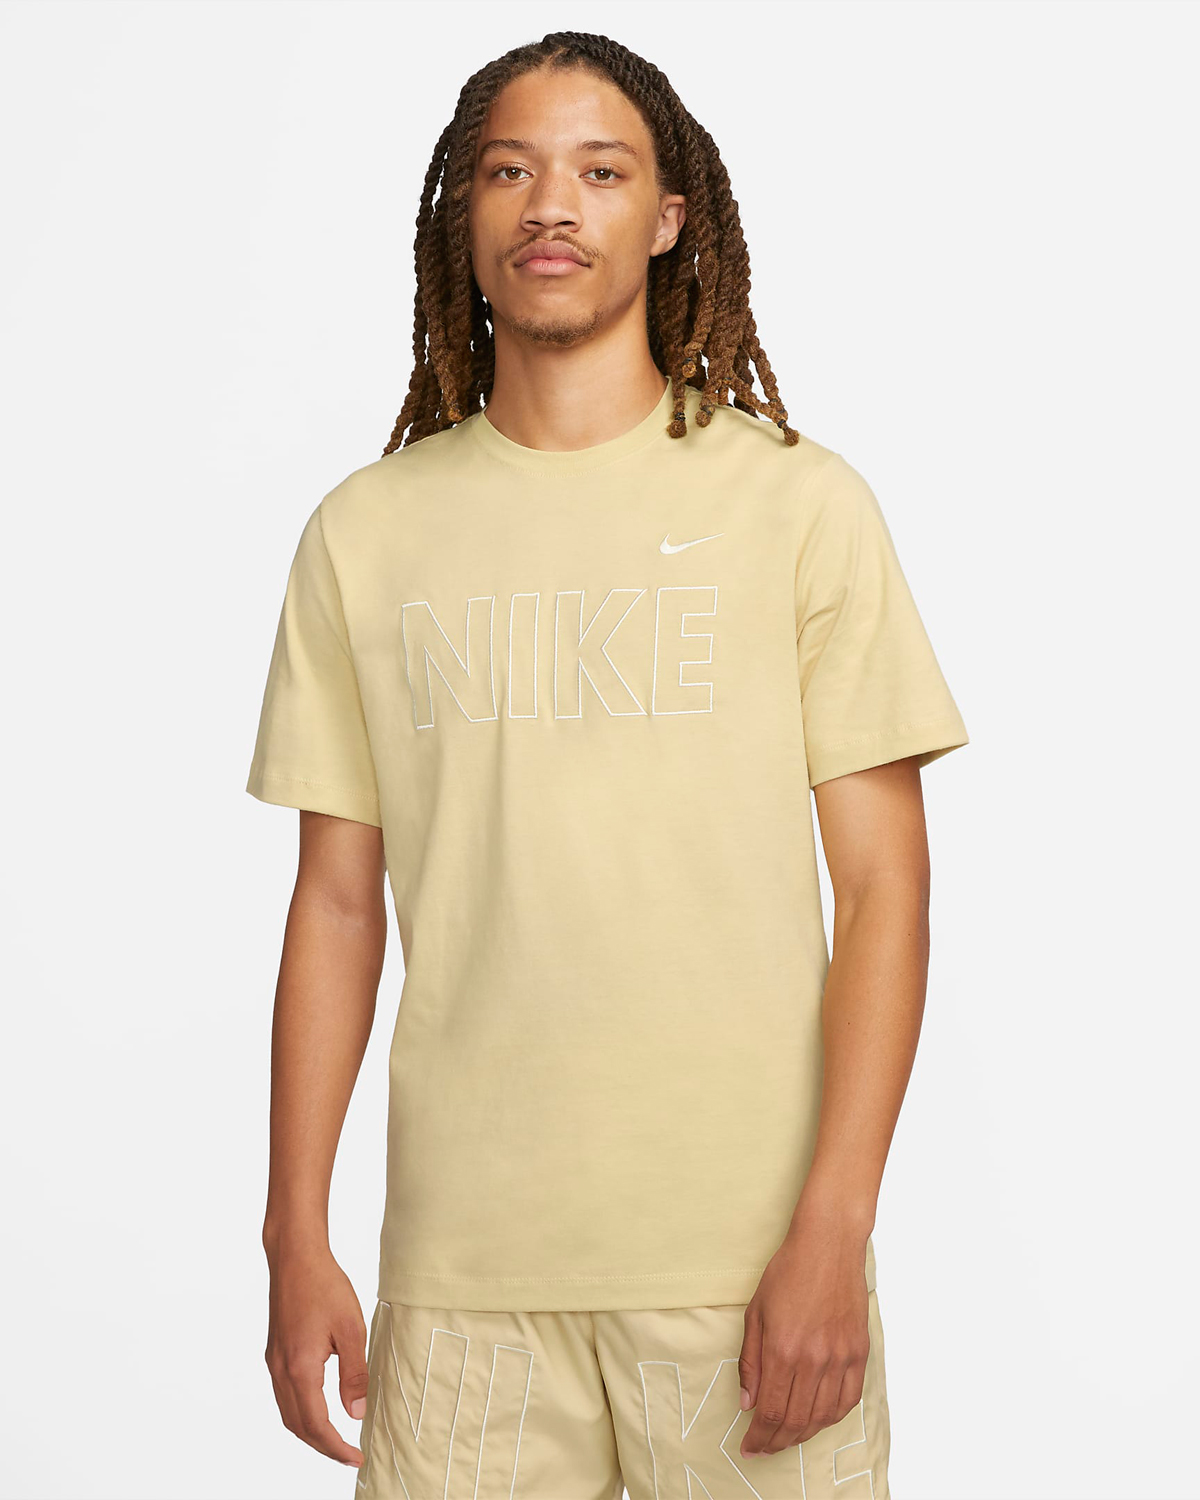 Nike-Sportswear-Team-Gold-T-Shirt